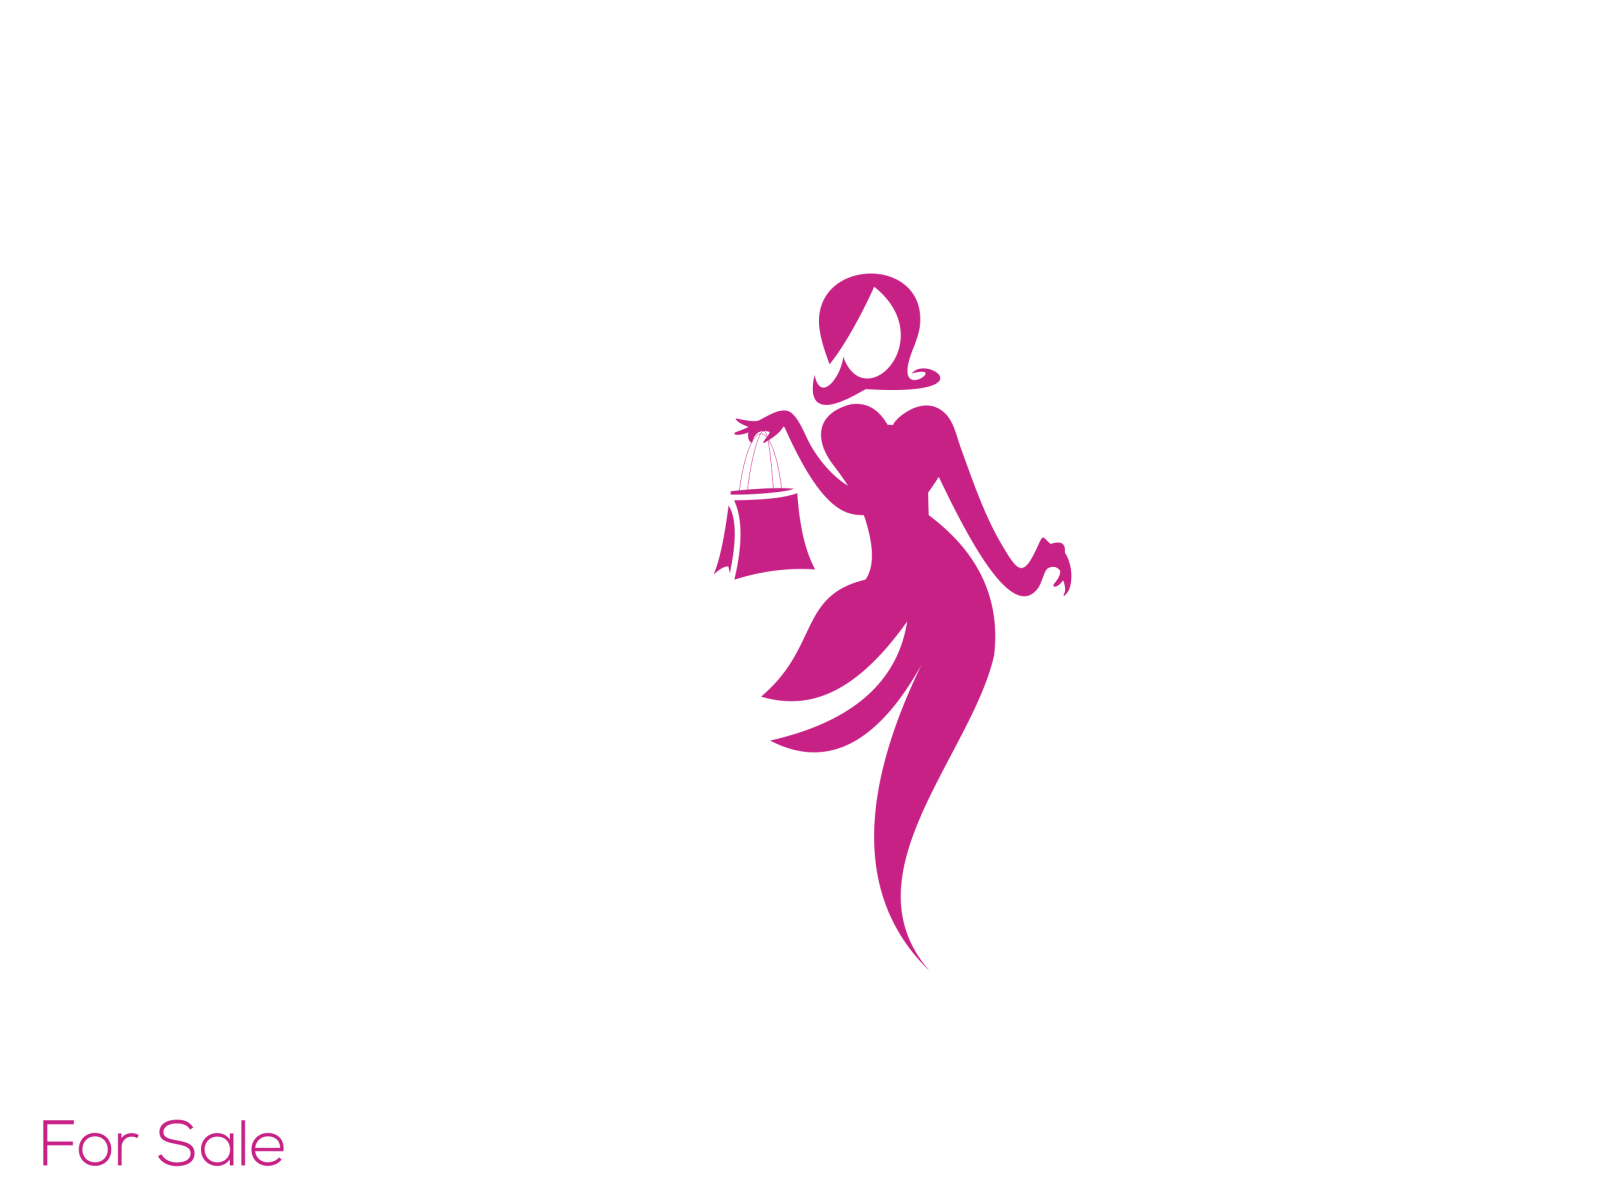 Logo fashion by Minang_Art on Dribbble